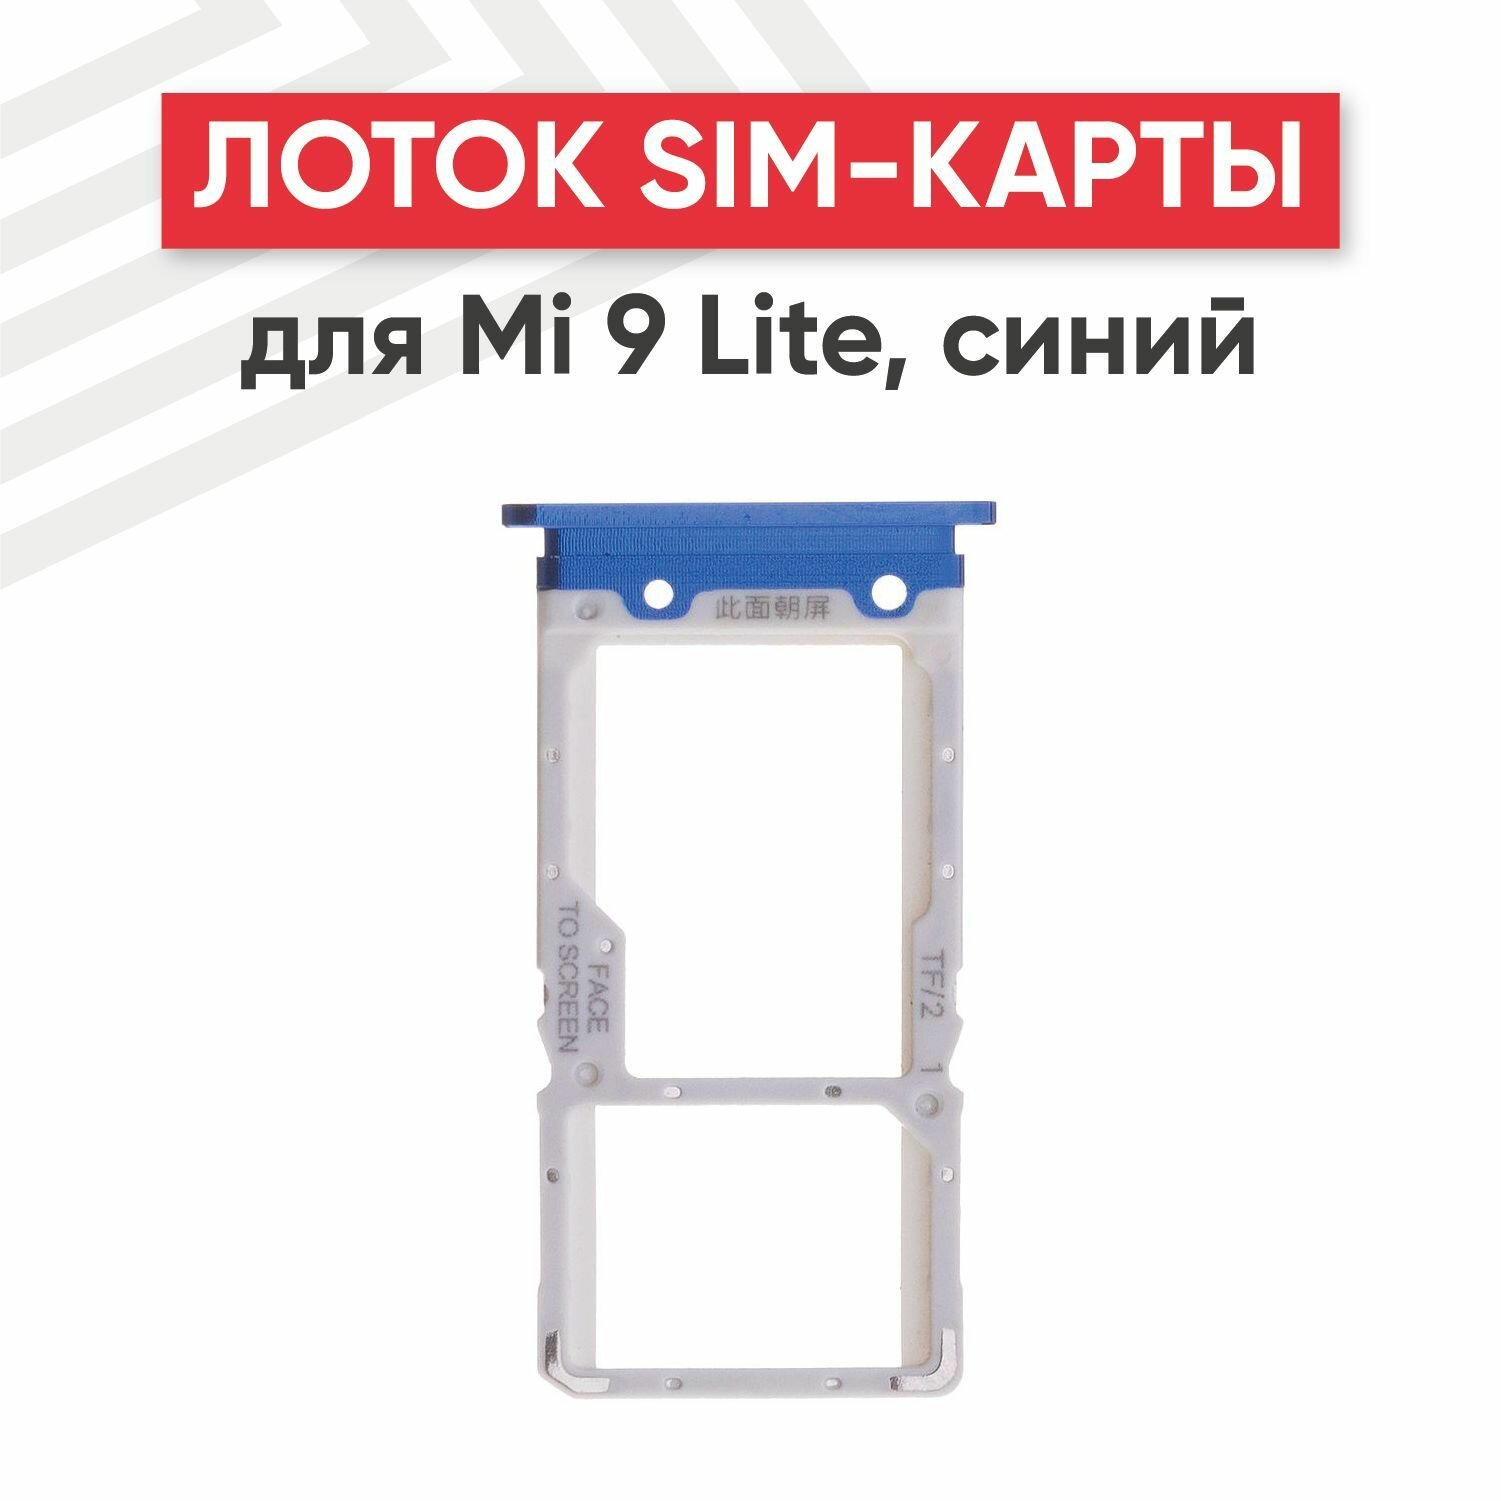 Держатель (лоток) SIM-карты RageX для Mi 9 Lite синий